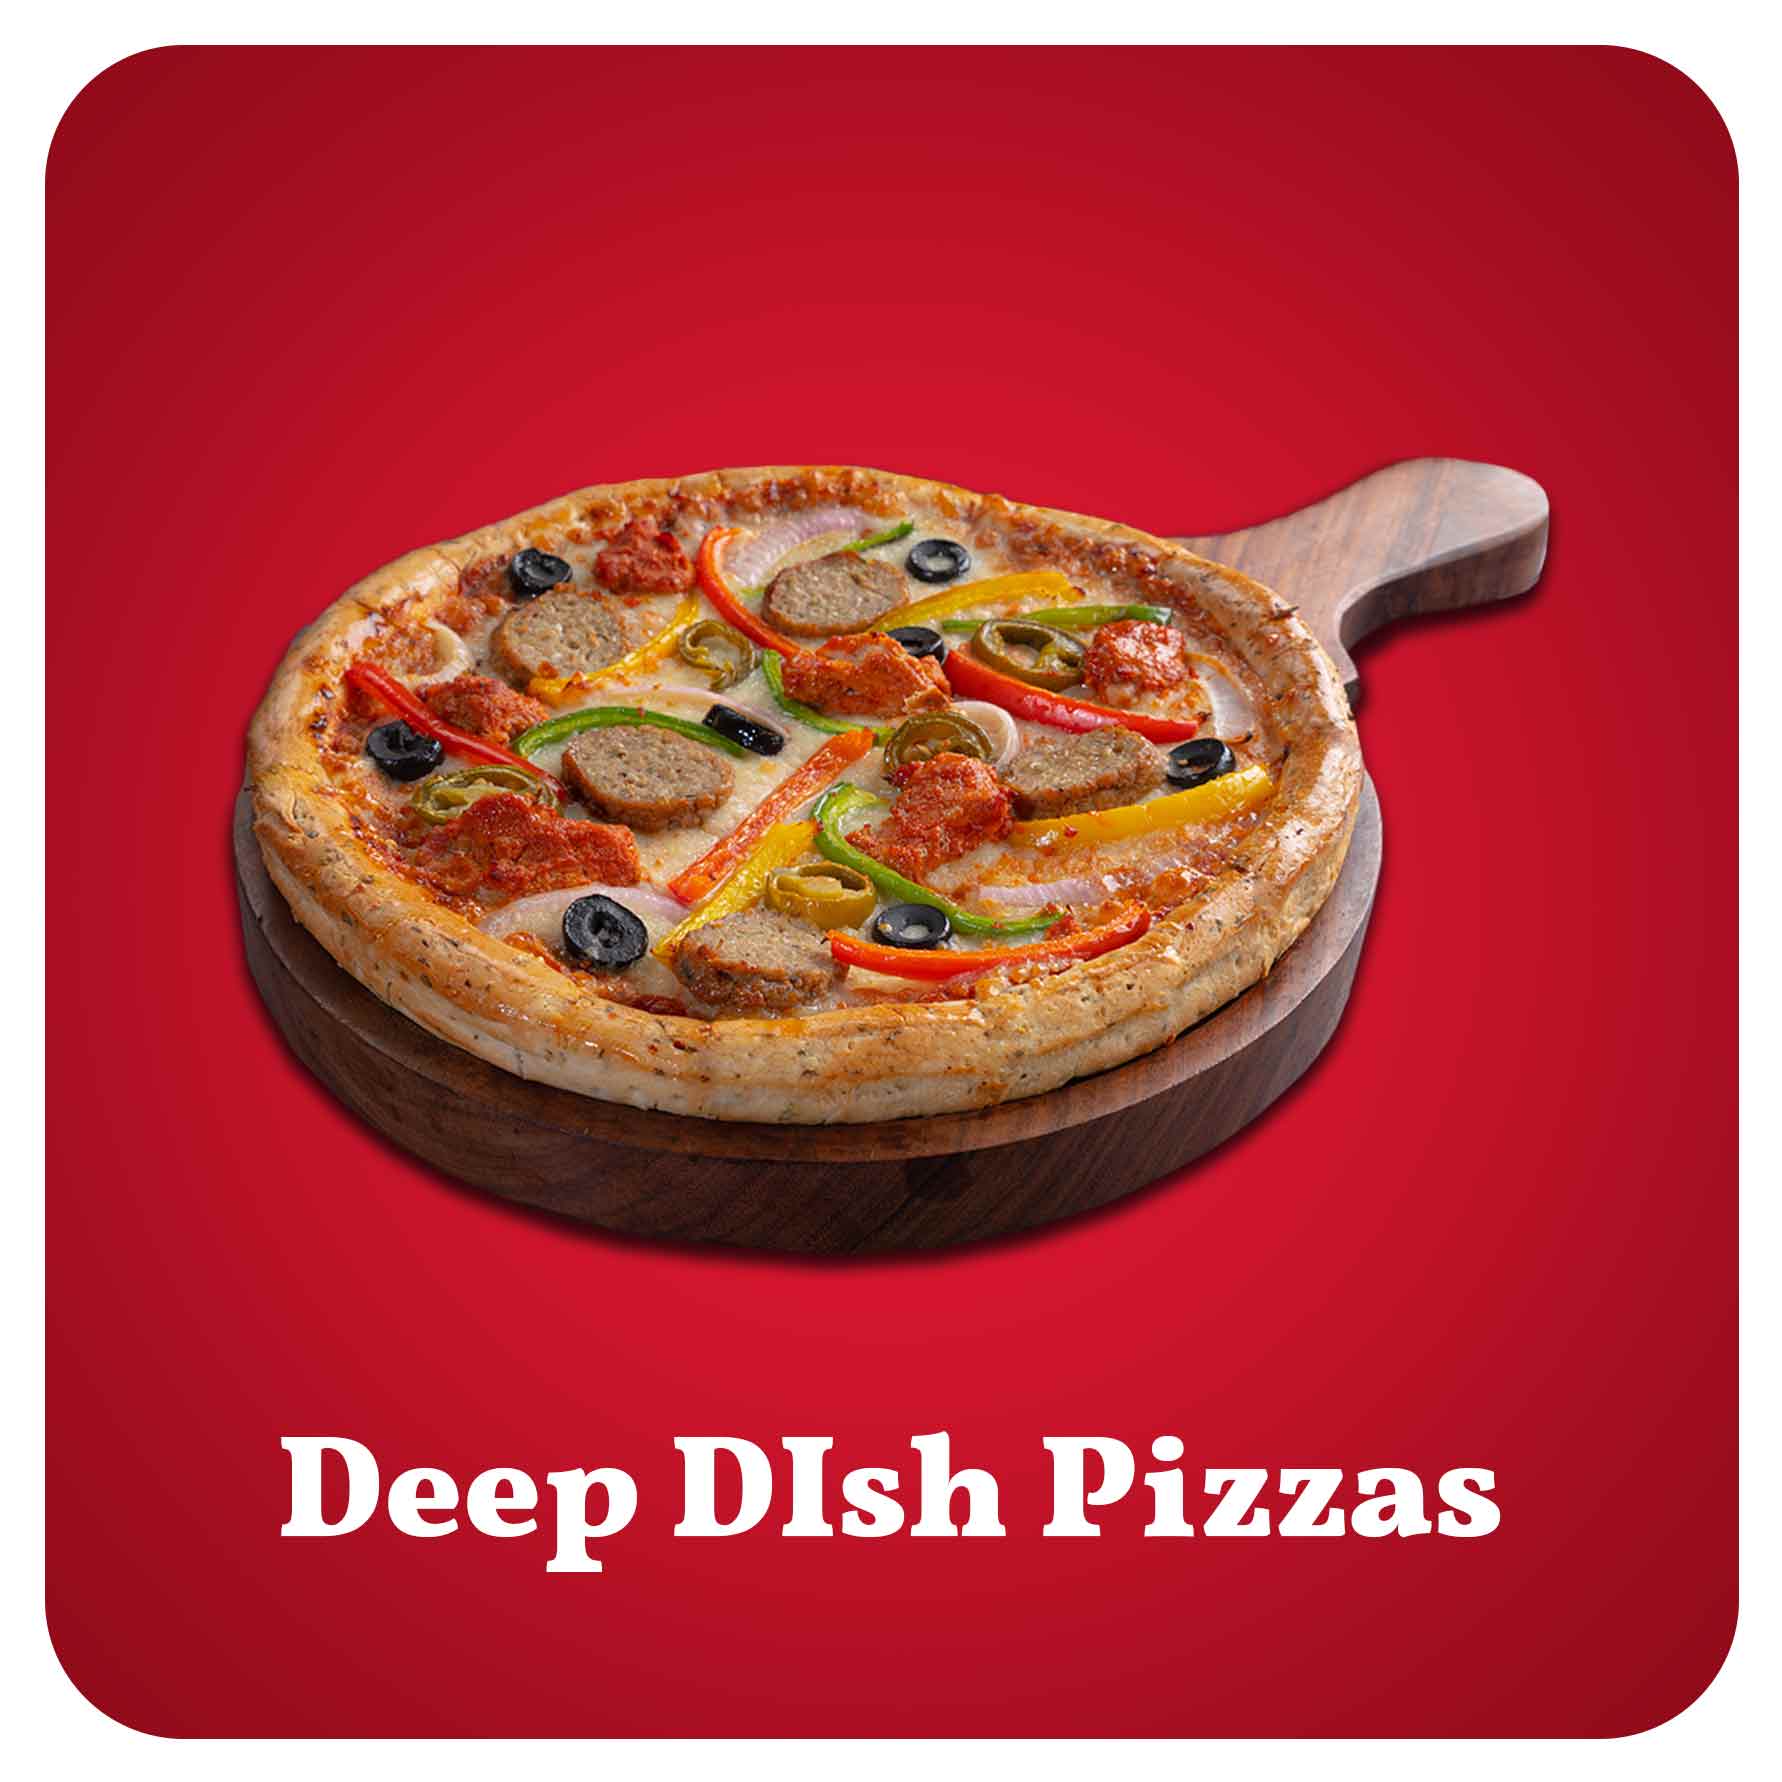 Order Cheesy Deep Dish Pizzas near me